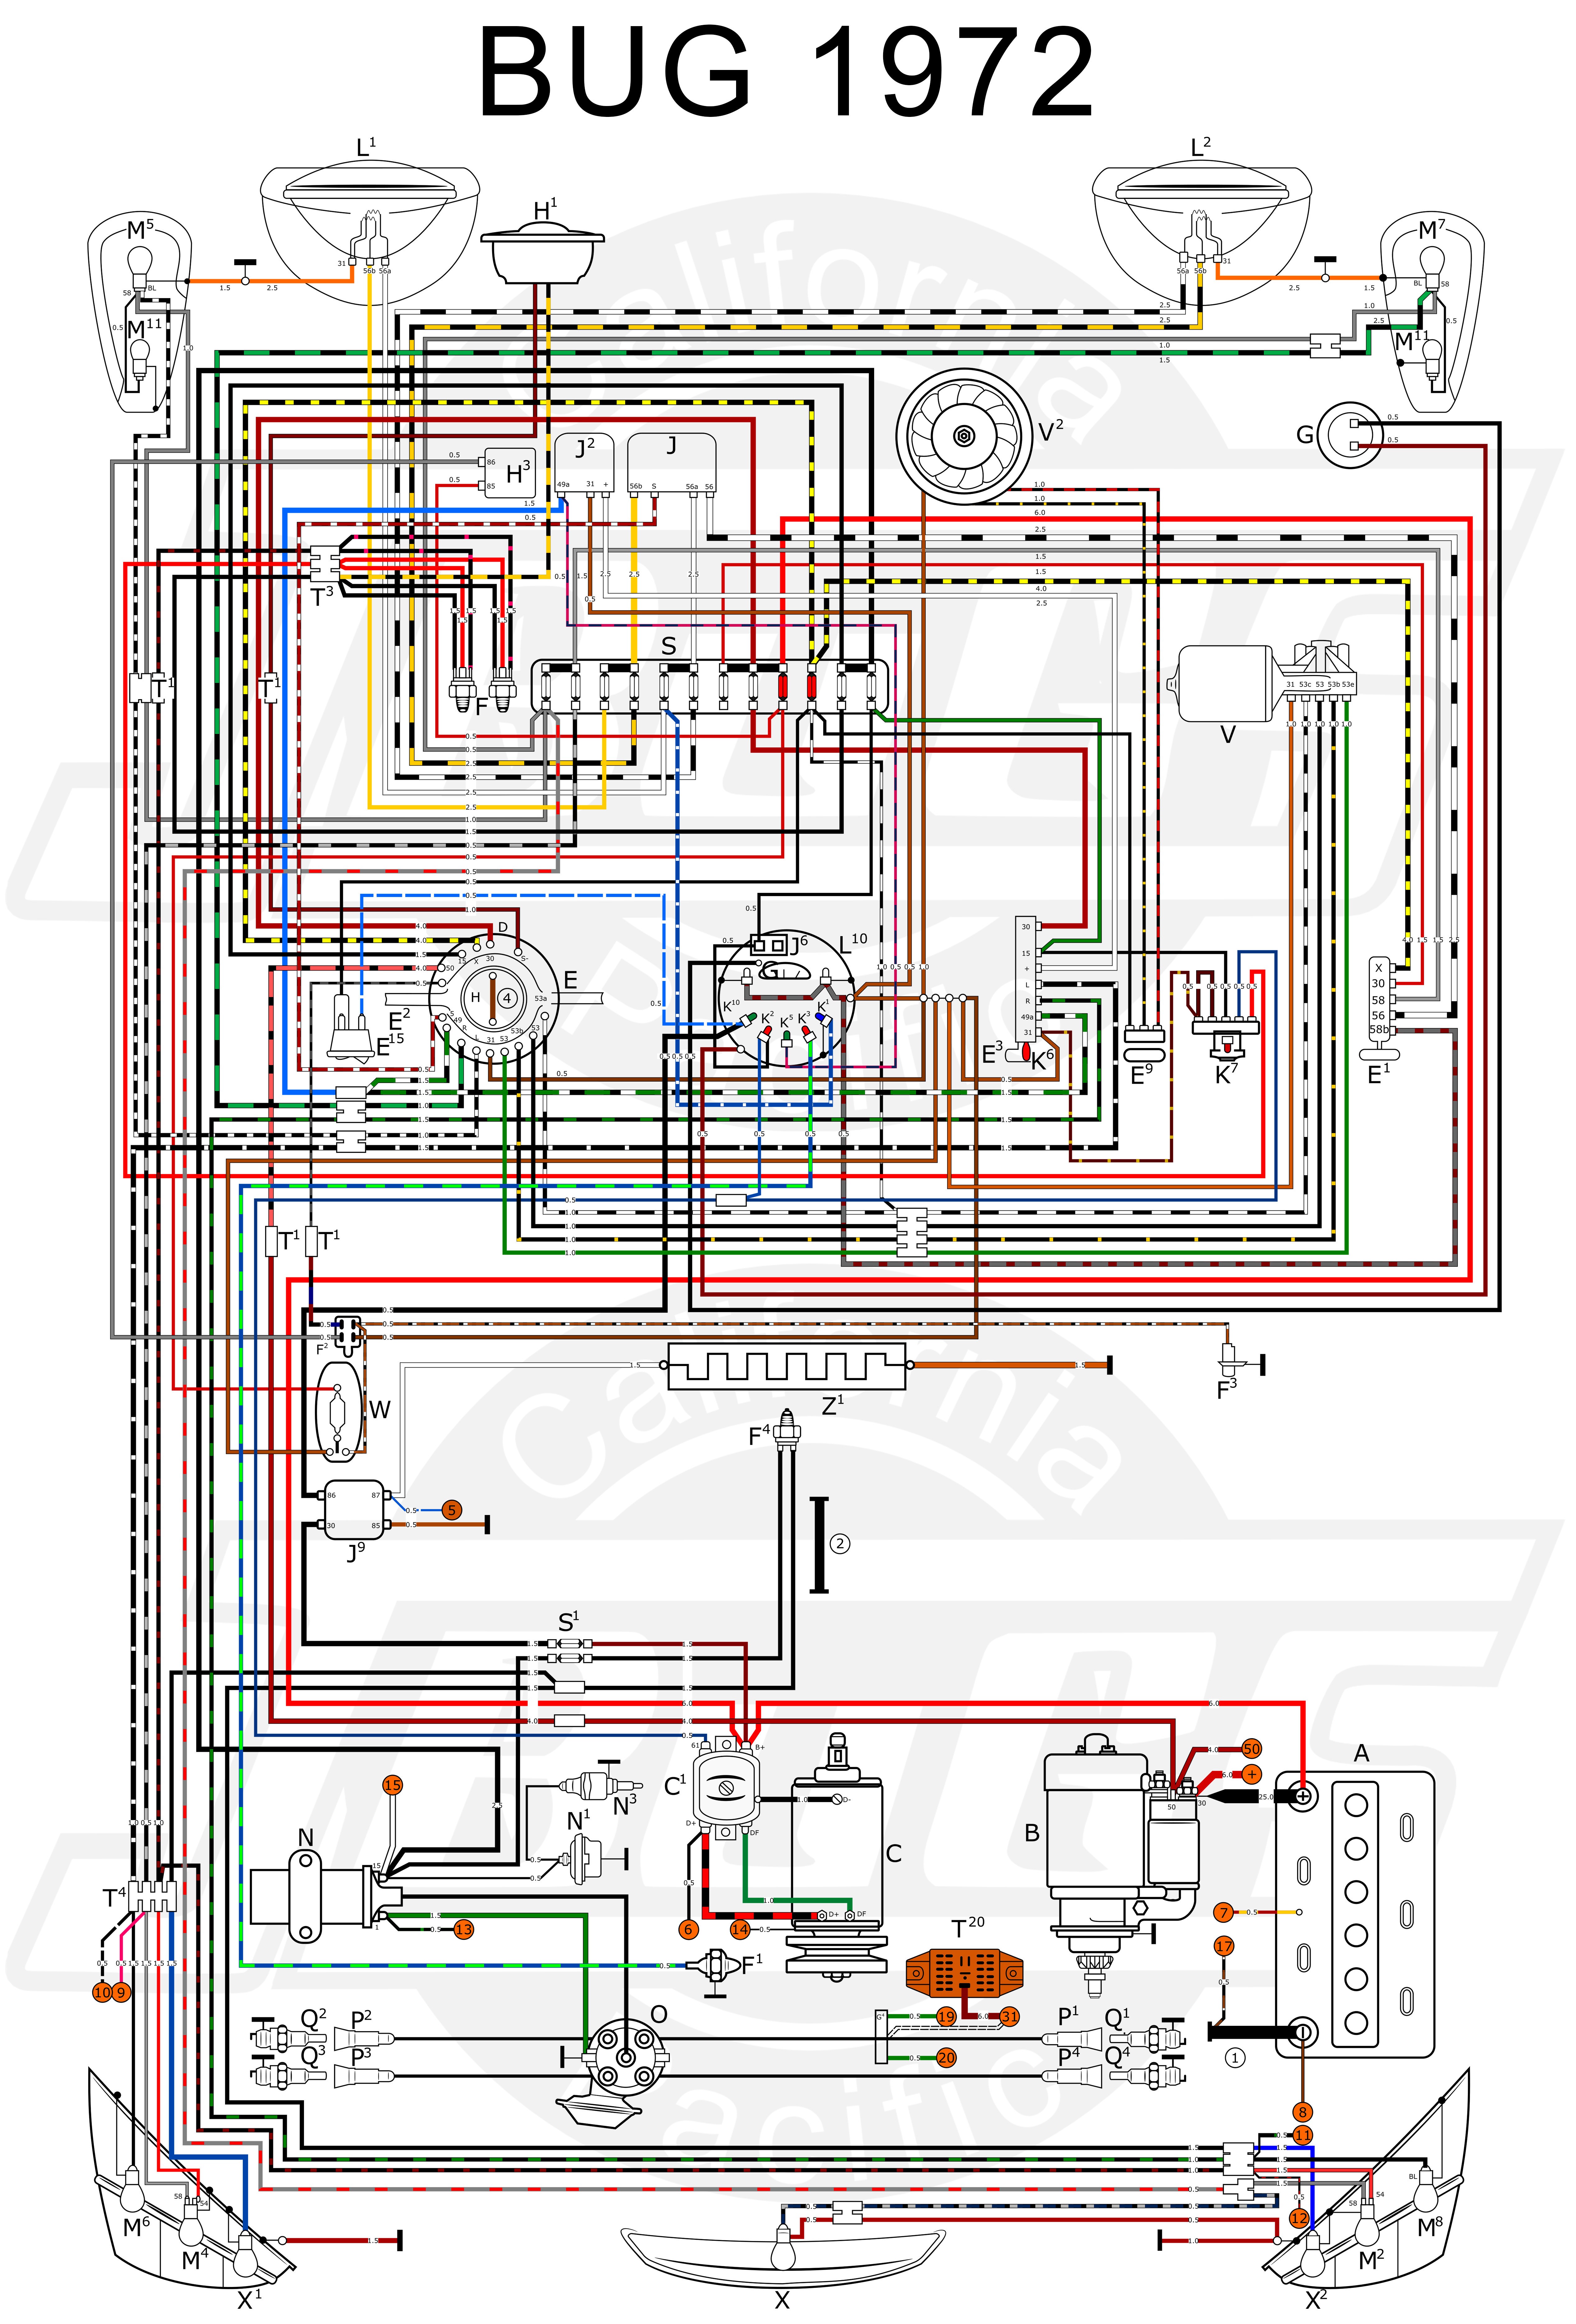 1999 Vw Beetle Engine Diagram 1970 Beetle Fuse Box Layout Wiring Diagrams • Of 1999 Vw Beetle Engine Diagram